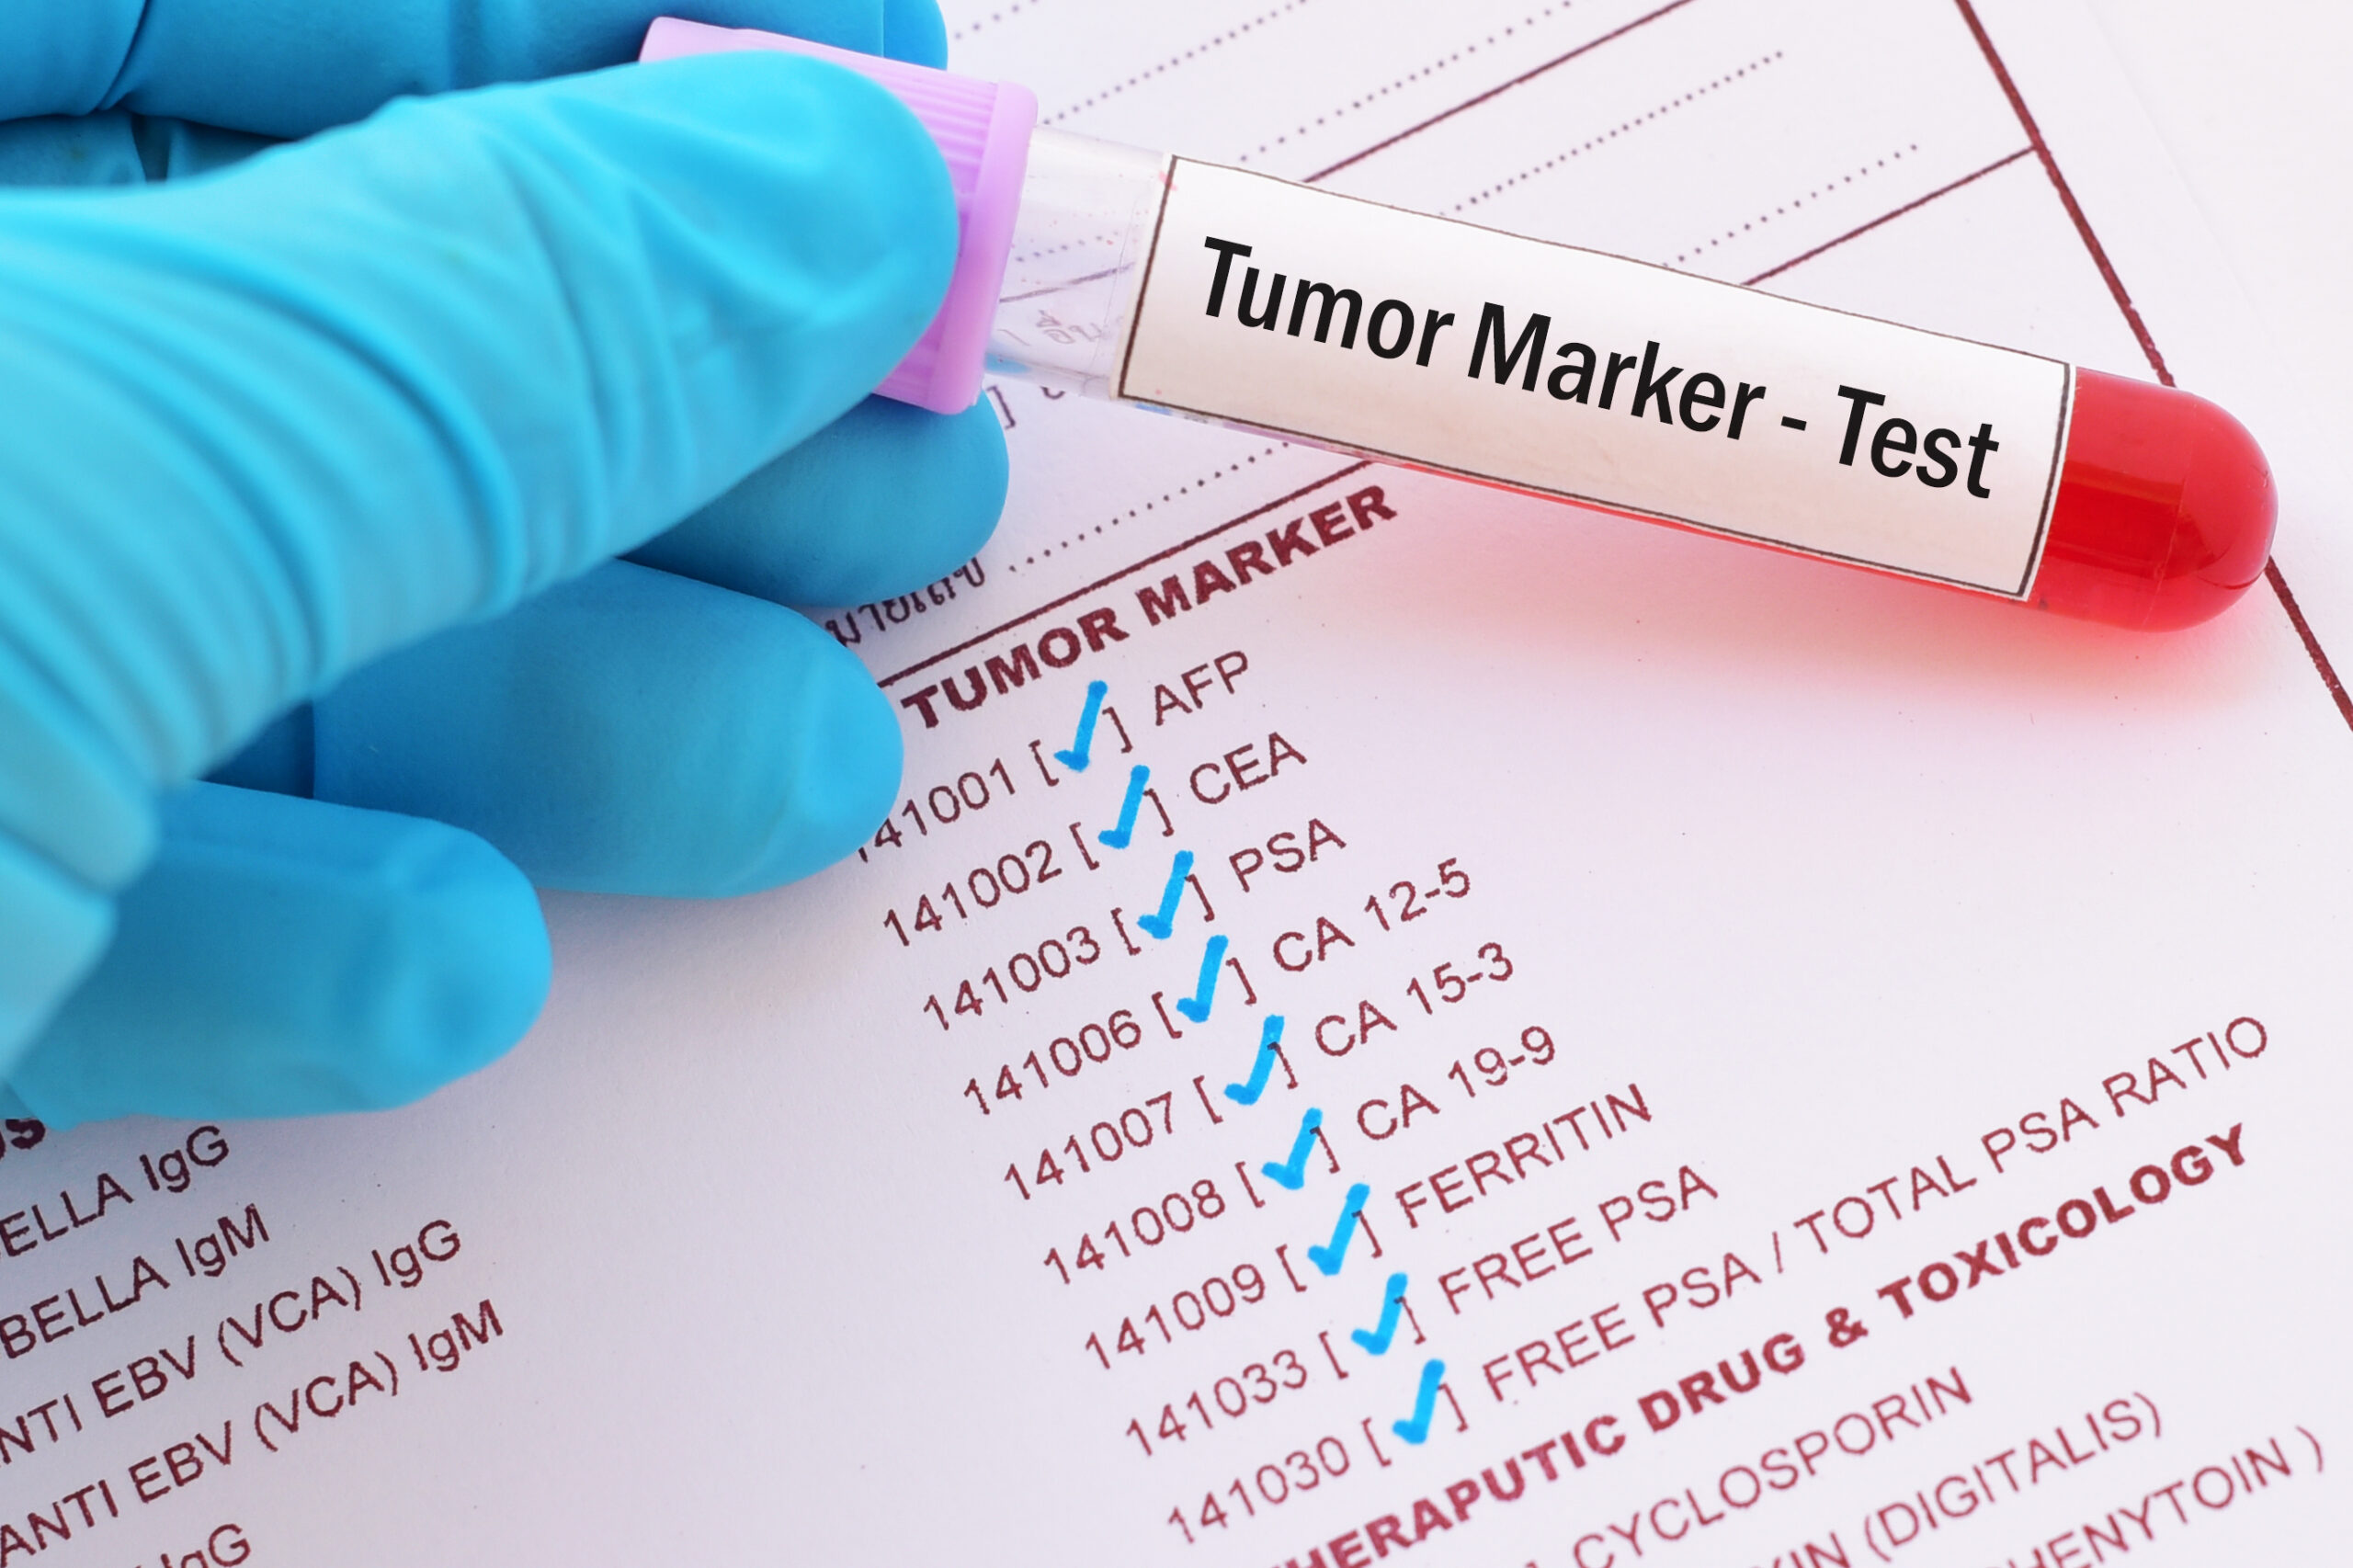 Test tube with blood sample for tumor marker test